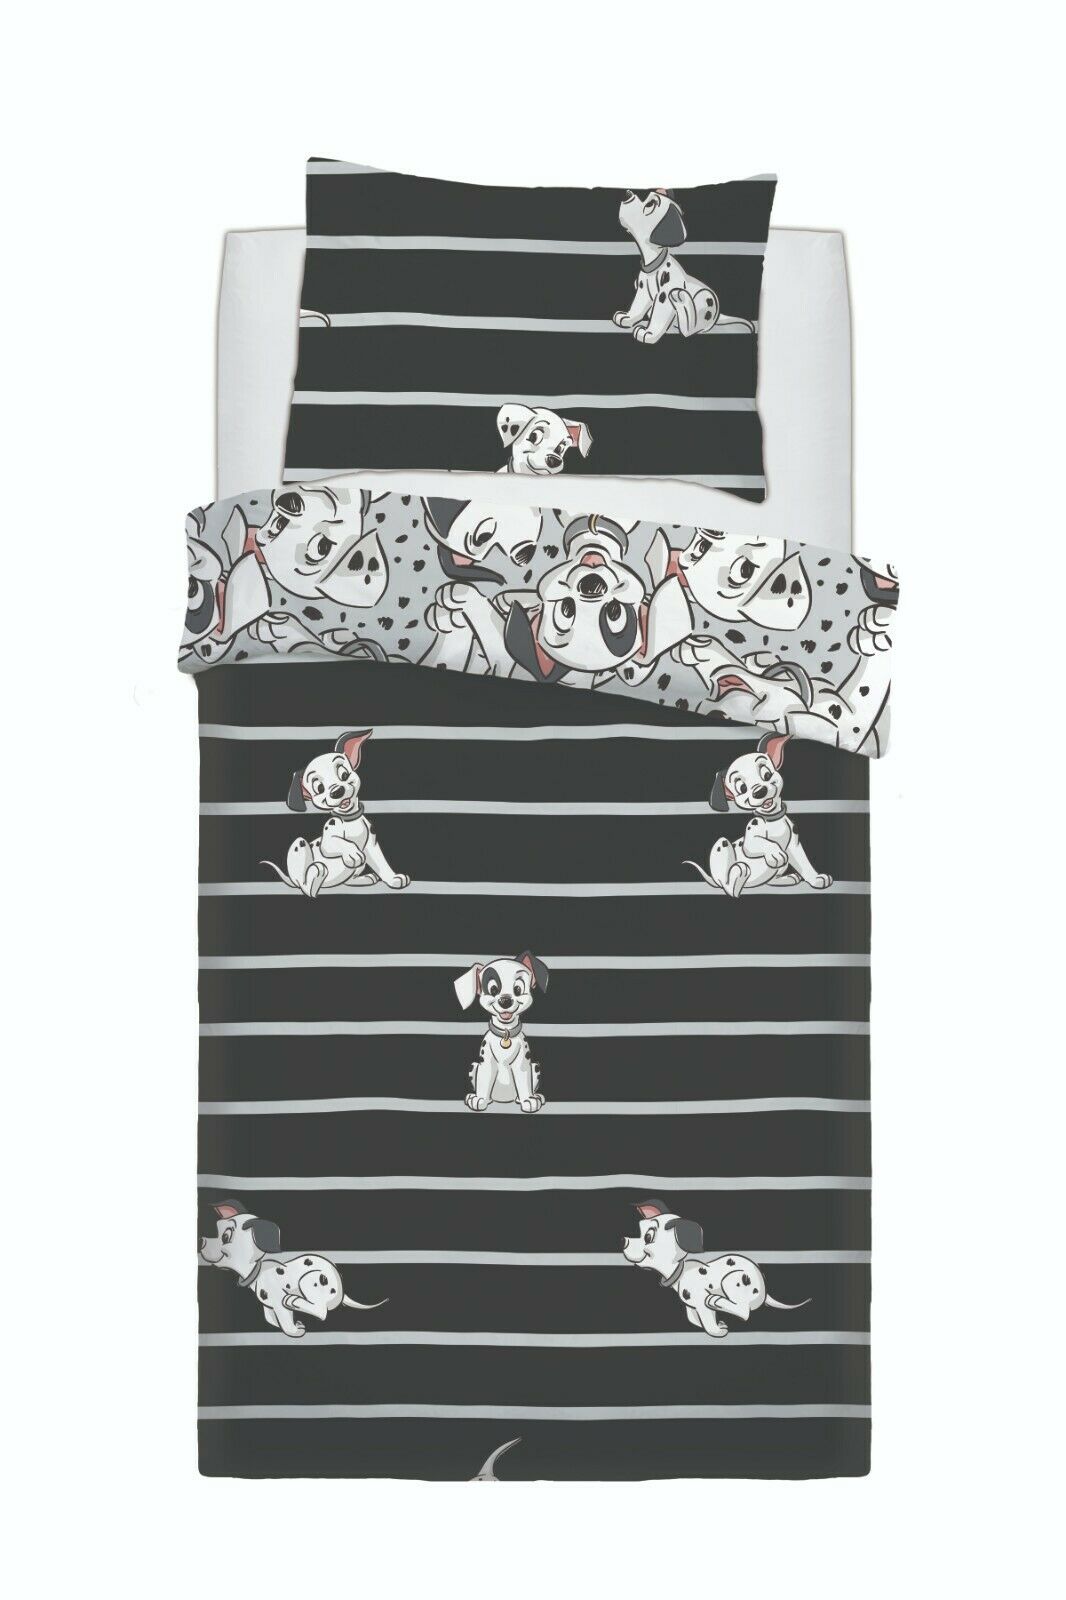 Dalmatians Hop Skip Jump Disney Style Duvet Cover Sets